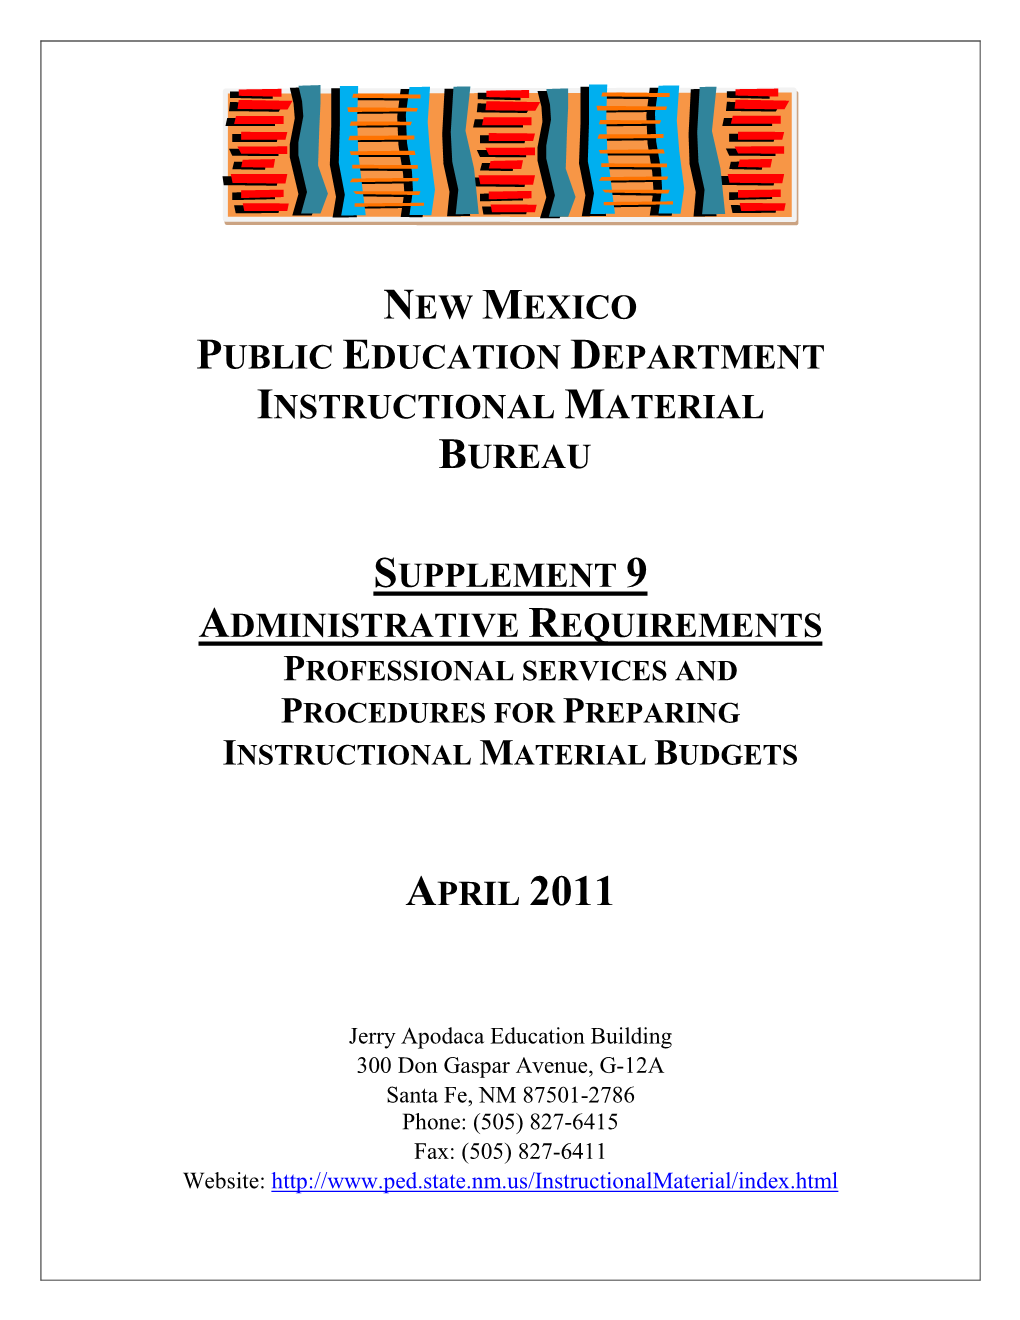 New Mexico Public Education Department Instructional Material Bureau